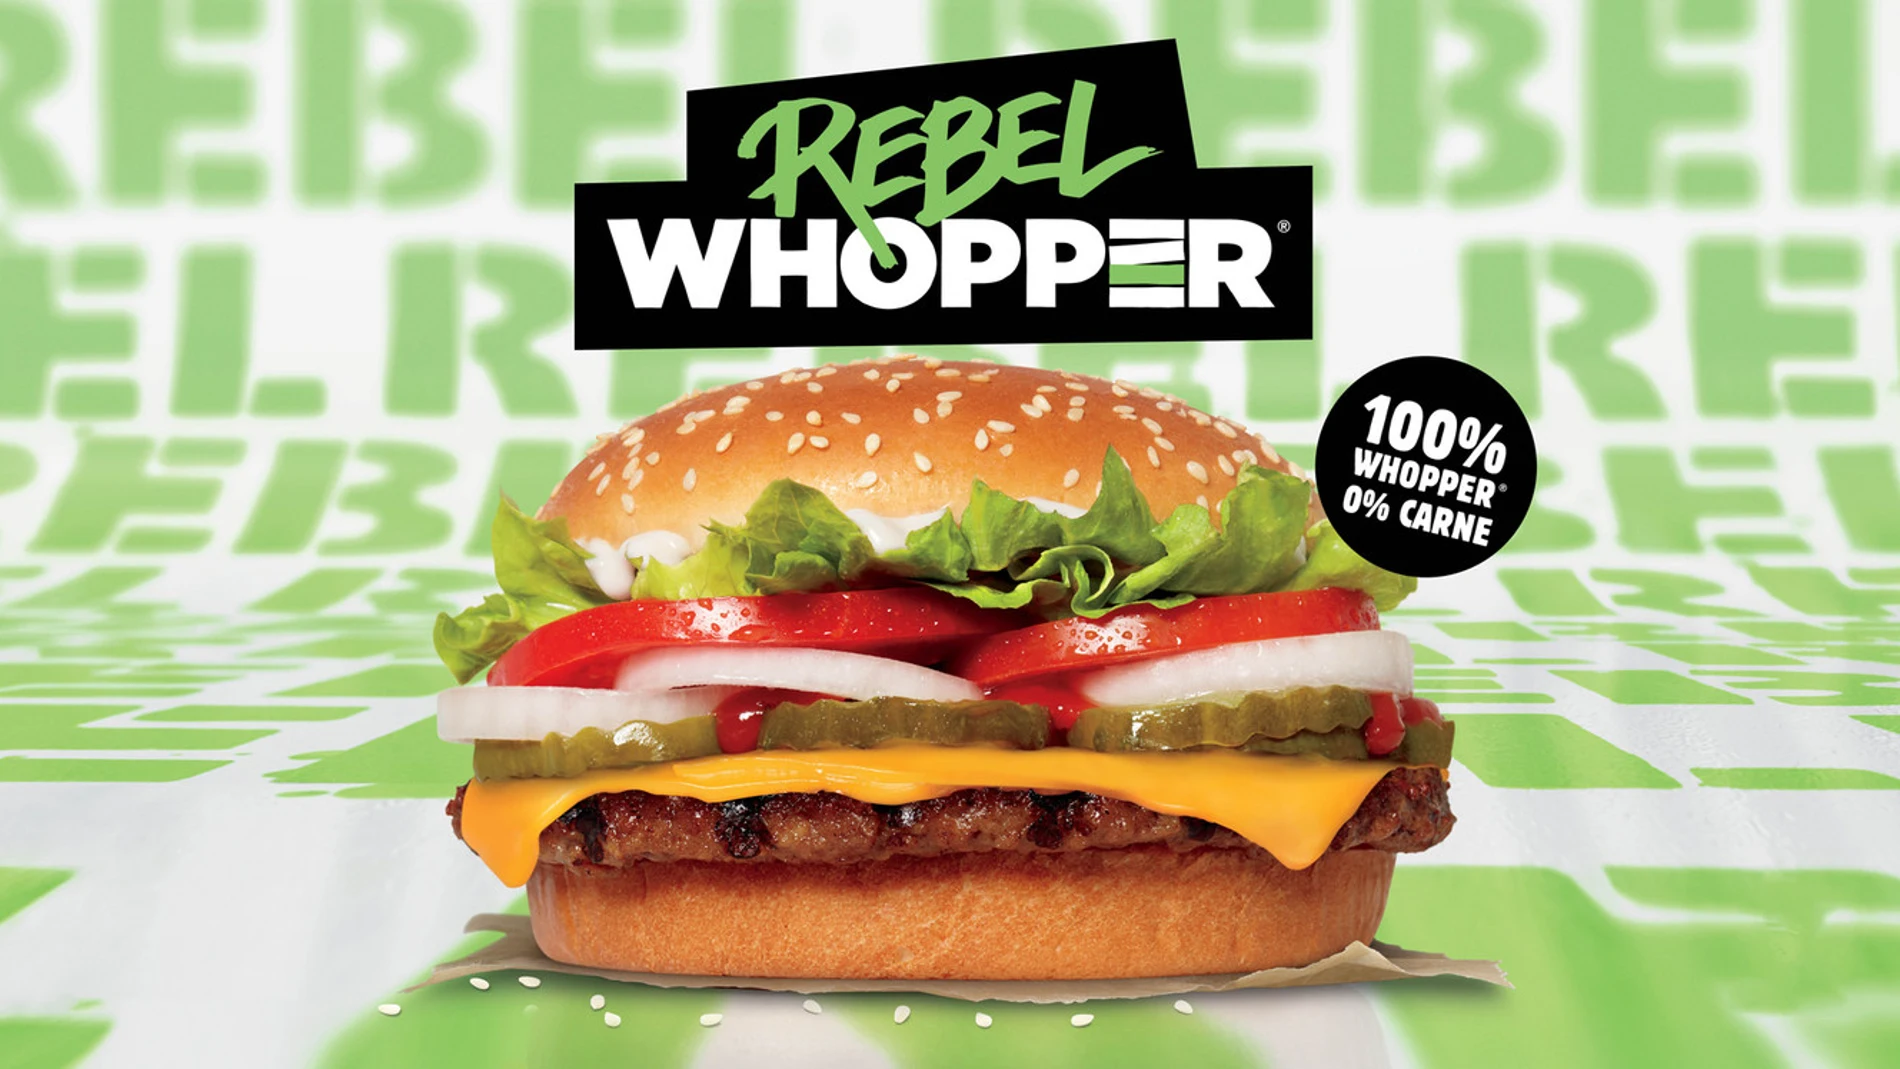 La nueva 'Rebel Whopper' / Burger King